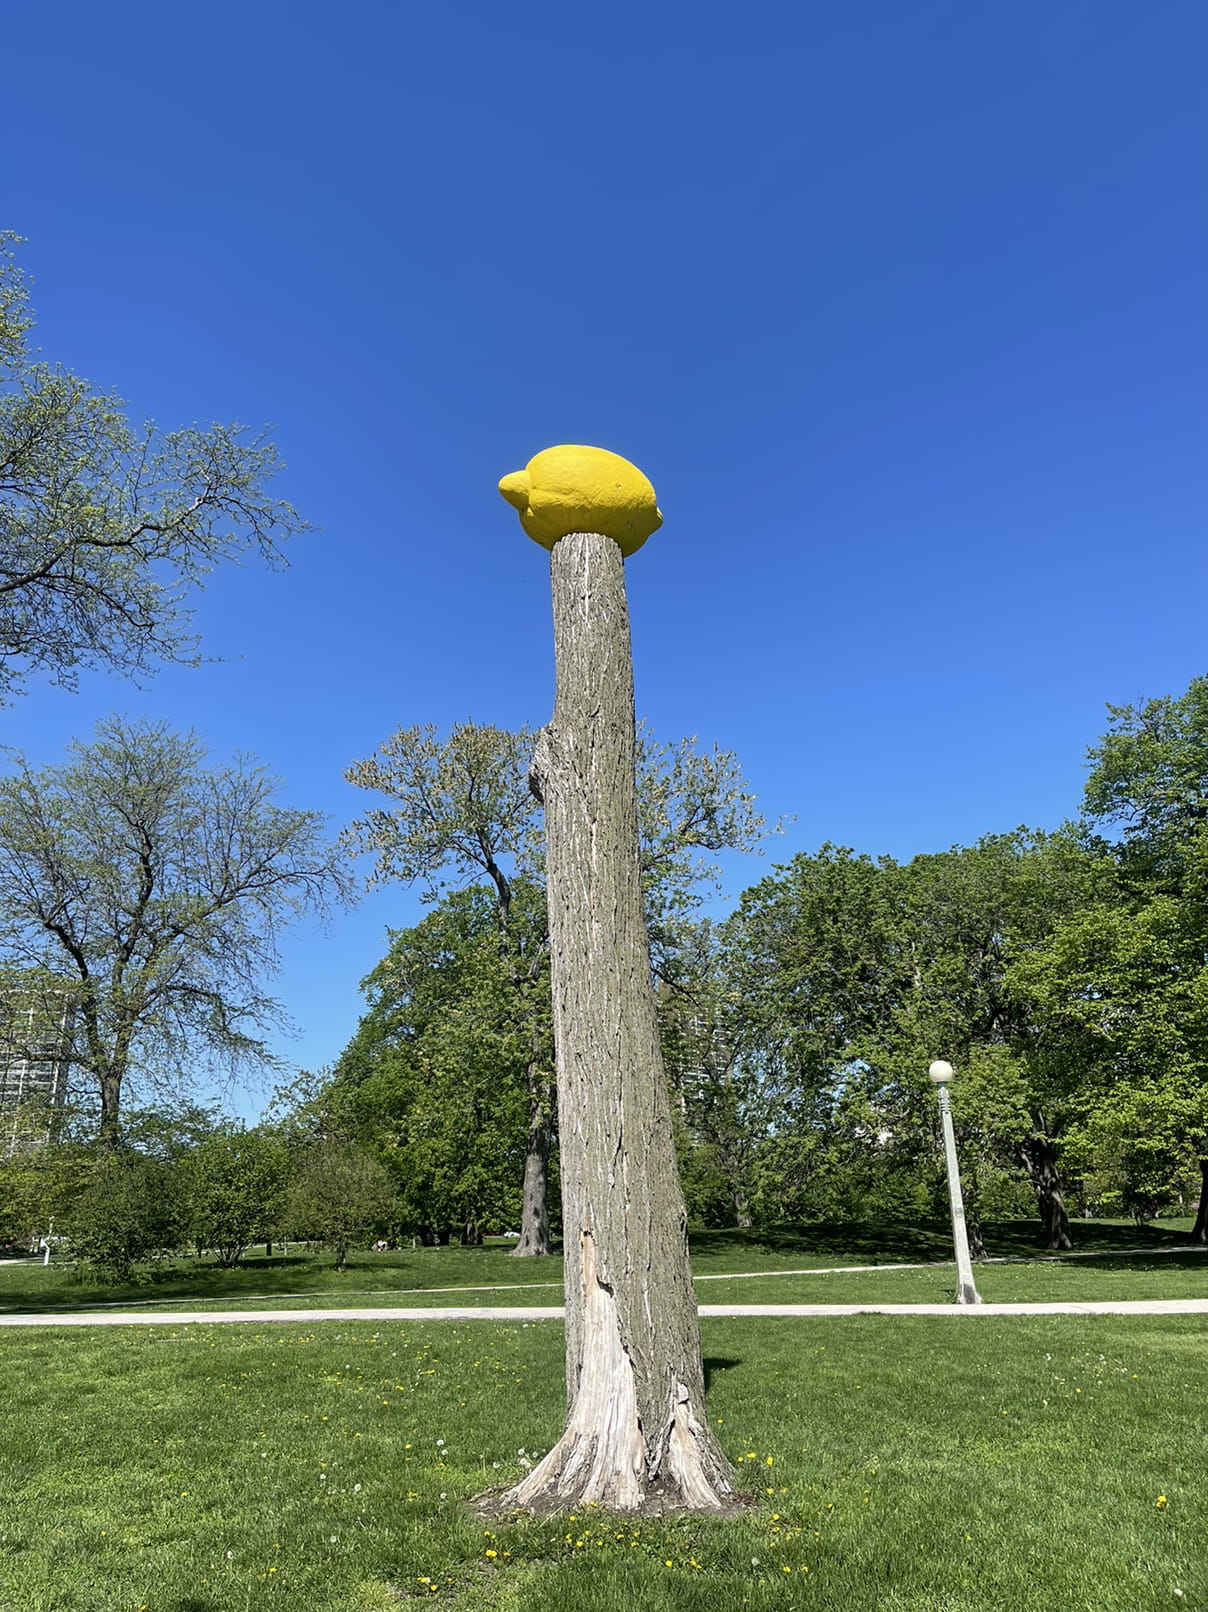 Lemon on a pole